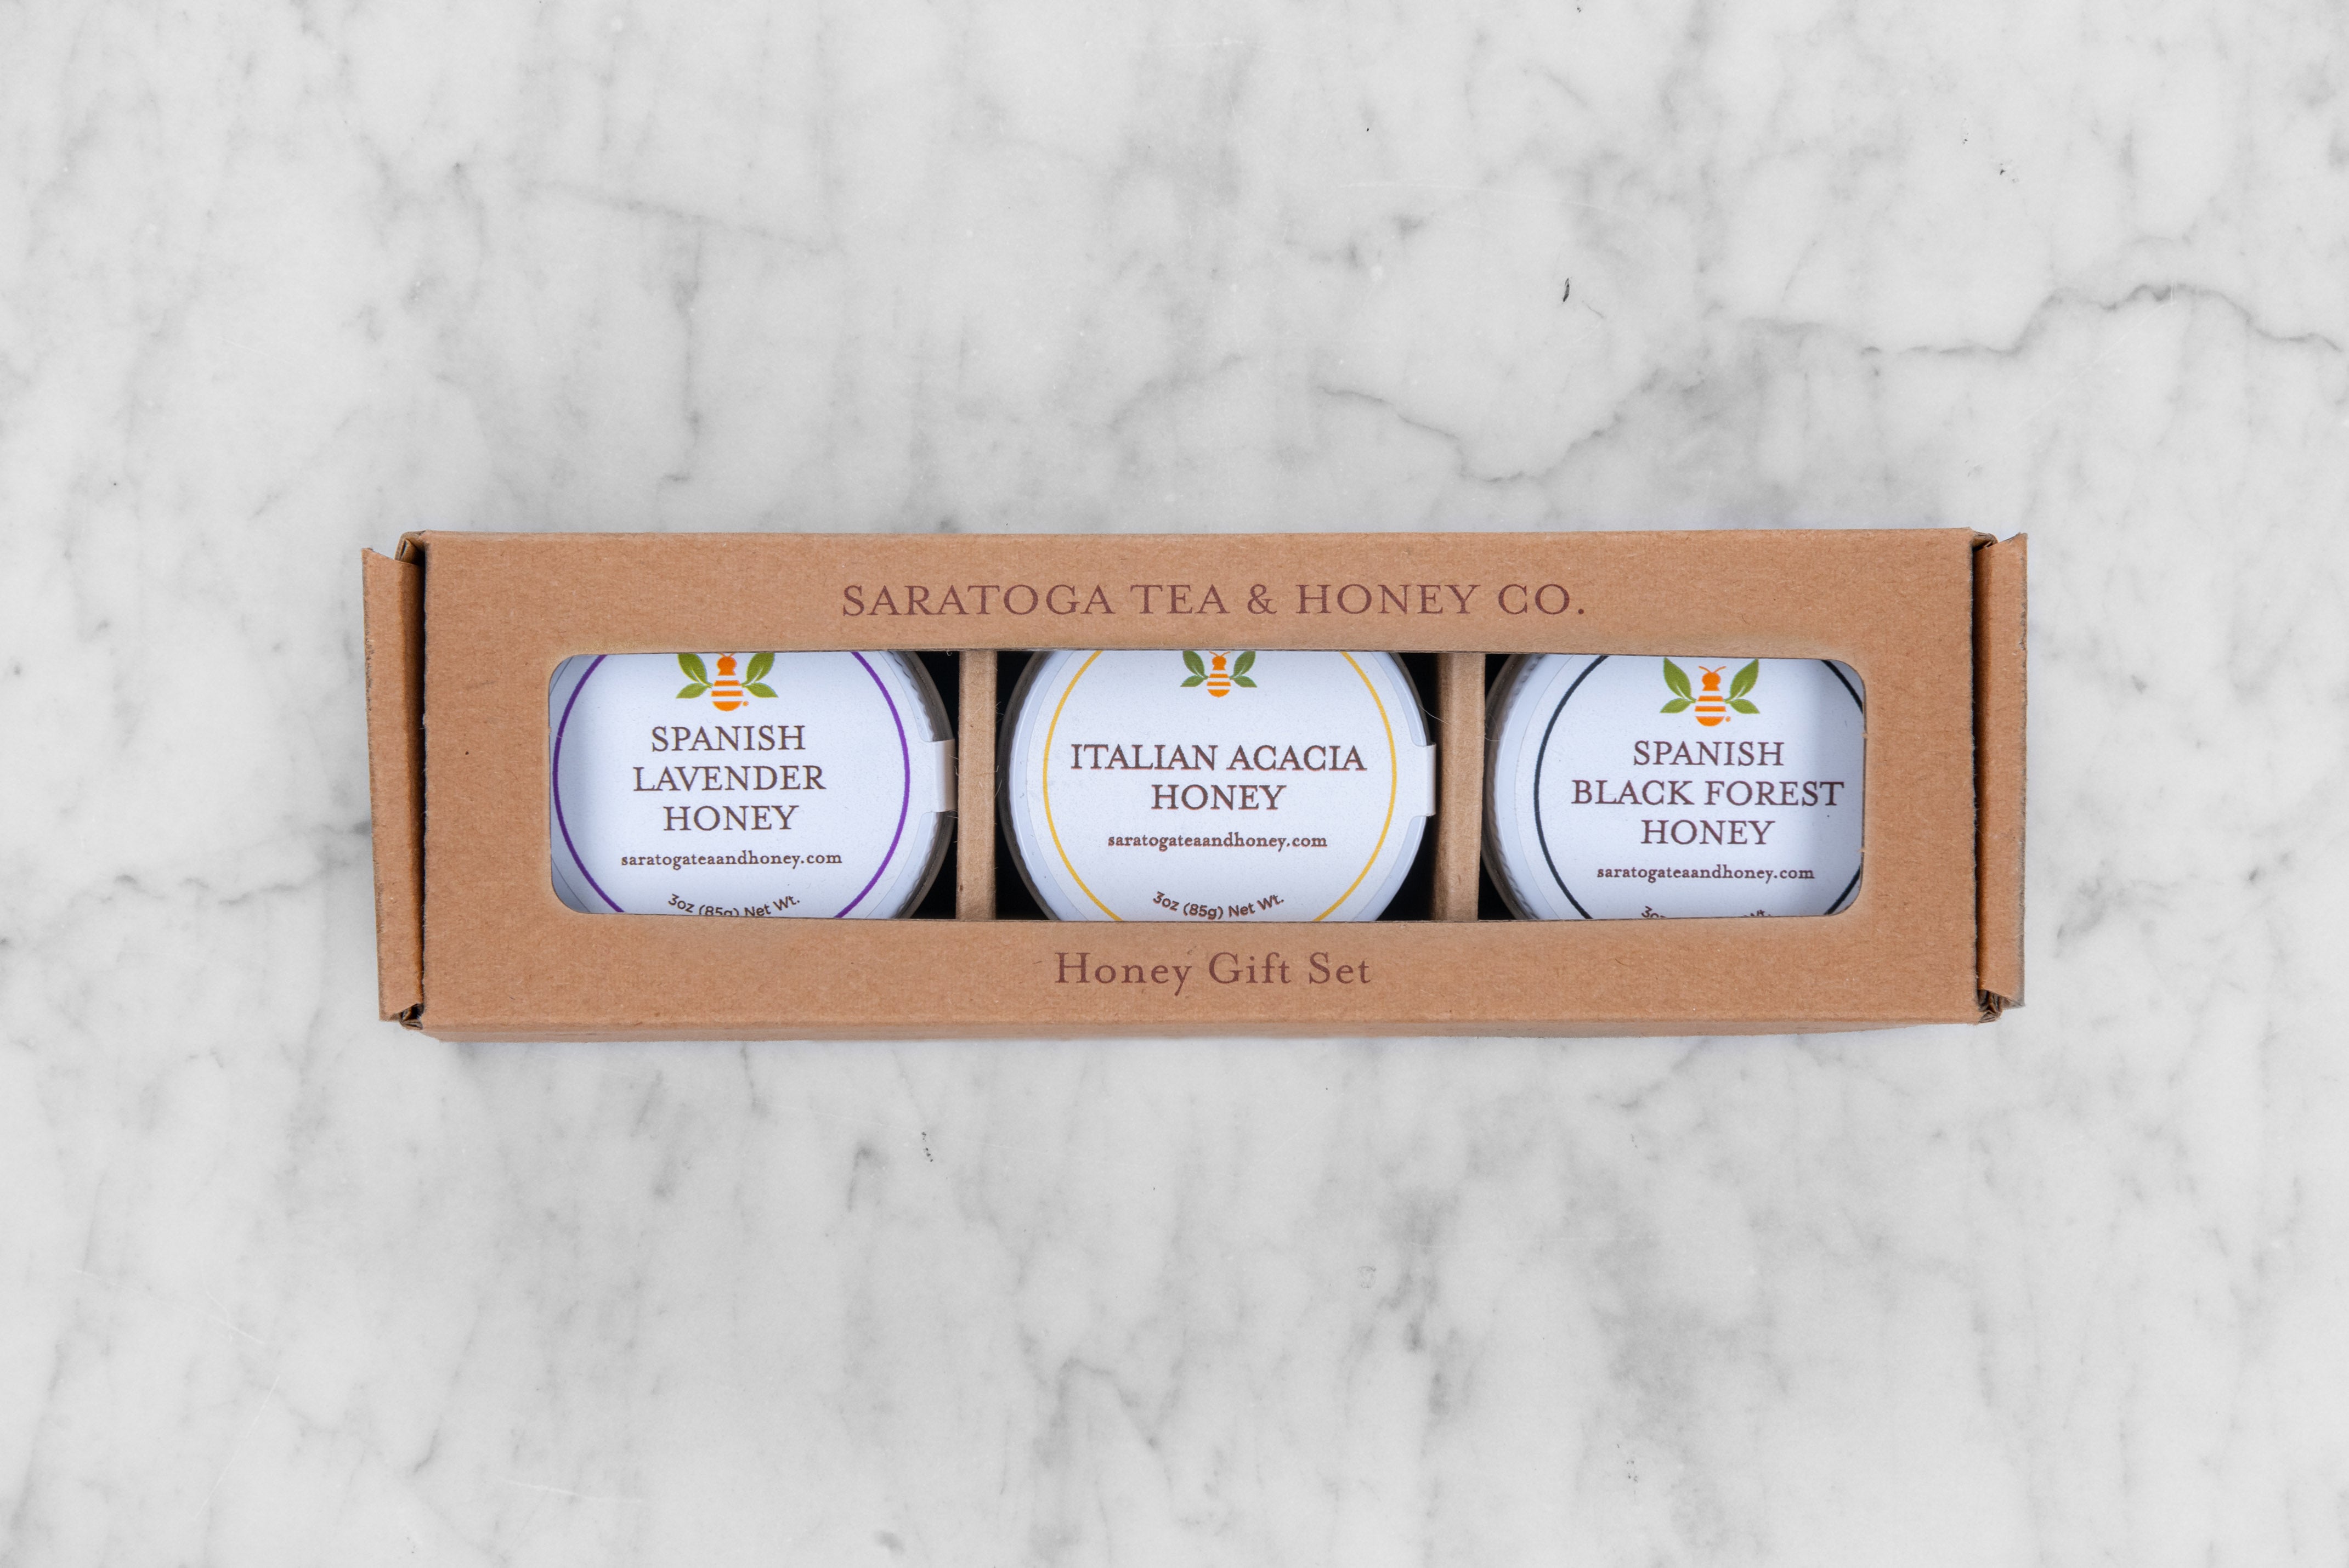 European Honeys Gift Set / Sample Pack in brown kraft box featuring Spanish Lavender Honey, Italian Acacia Honey, and Spanish Black Forest Honey